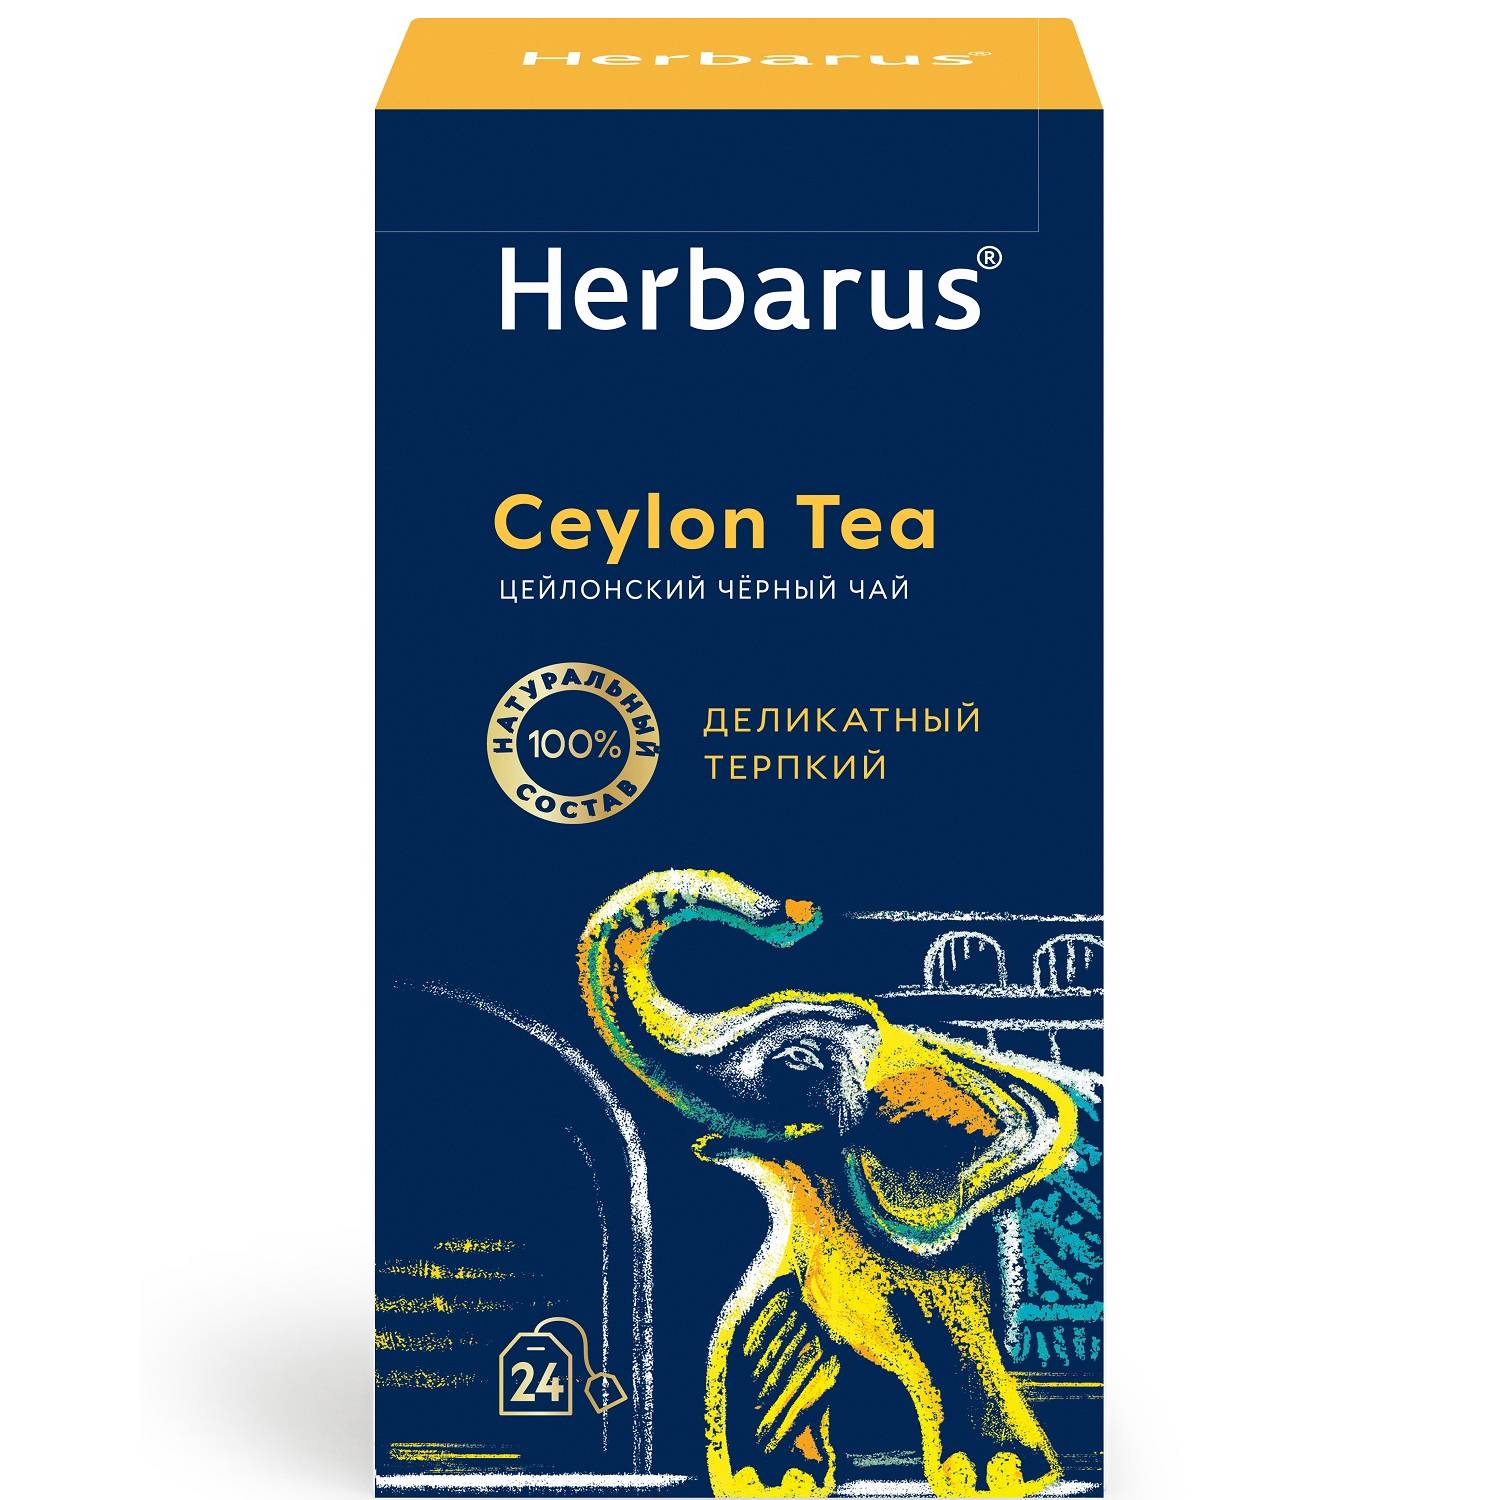 Herbarus Цейлонский черный чай Ceylon Tea, 24 пакетика х 2 г (Herbarus, Классический чай) herbarus чай улун с добавками мятный спокойный 24 шт х 2 г herbarus чай с добавками